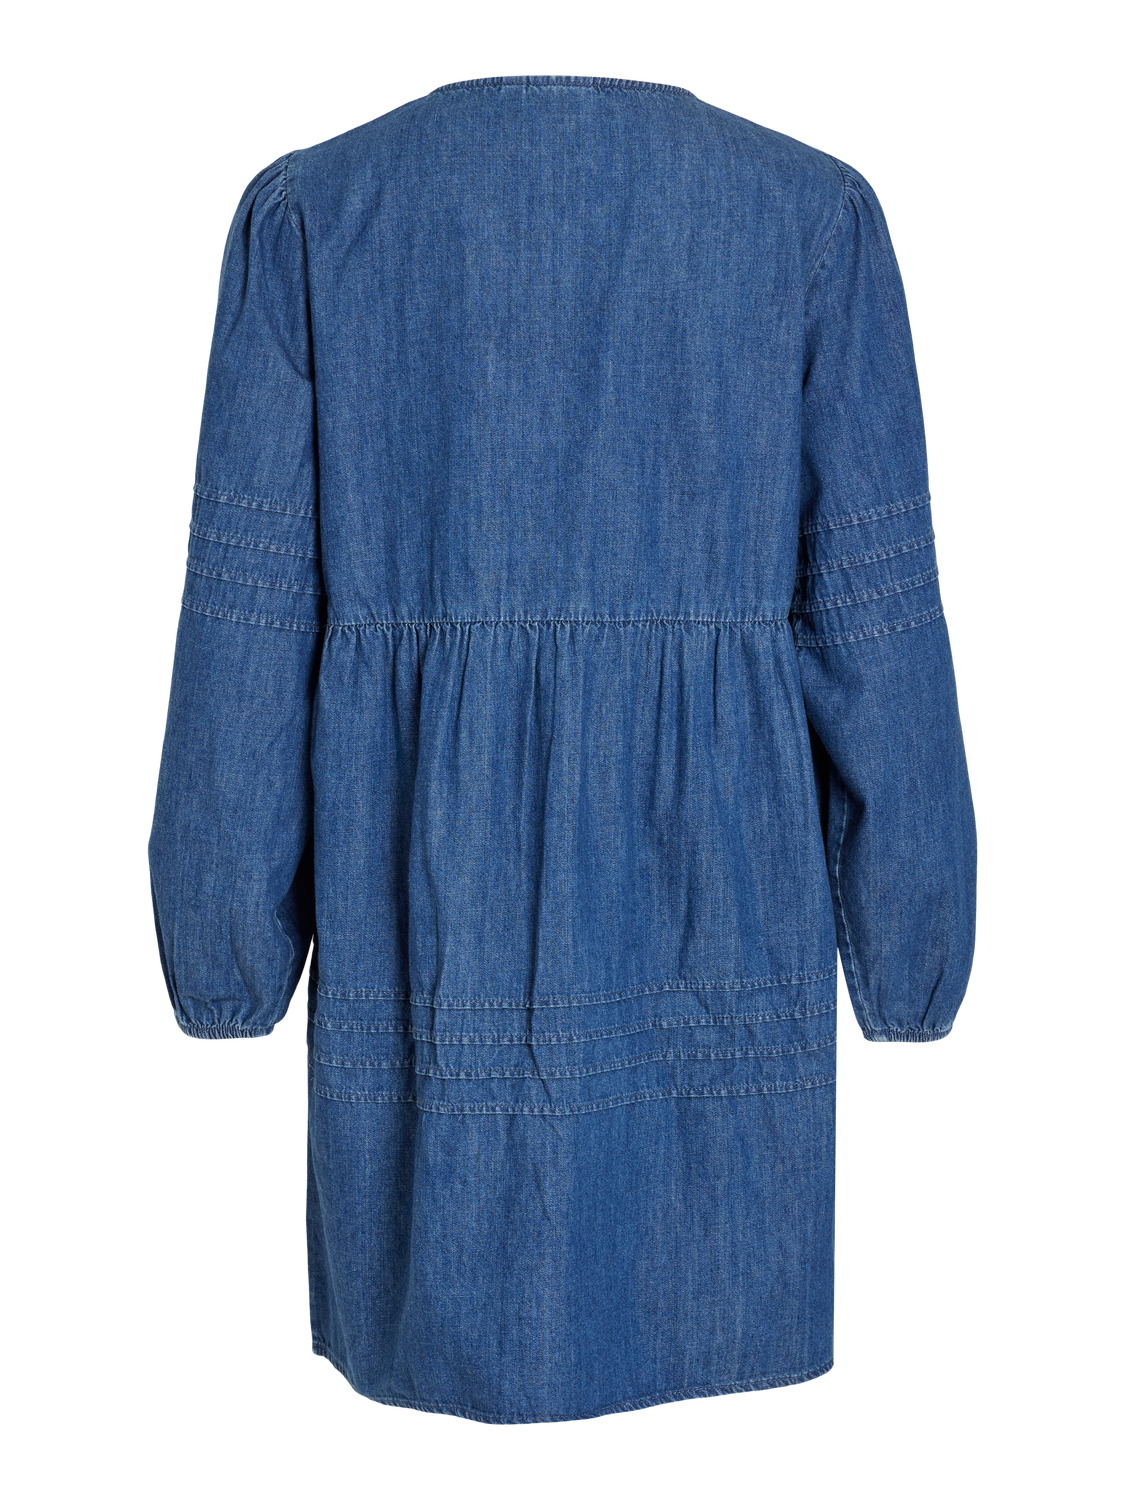 VIROWIE Dress - Medium Blue Denim